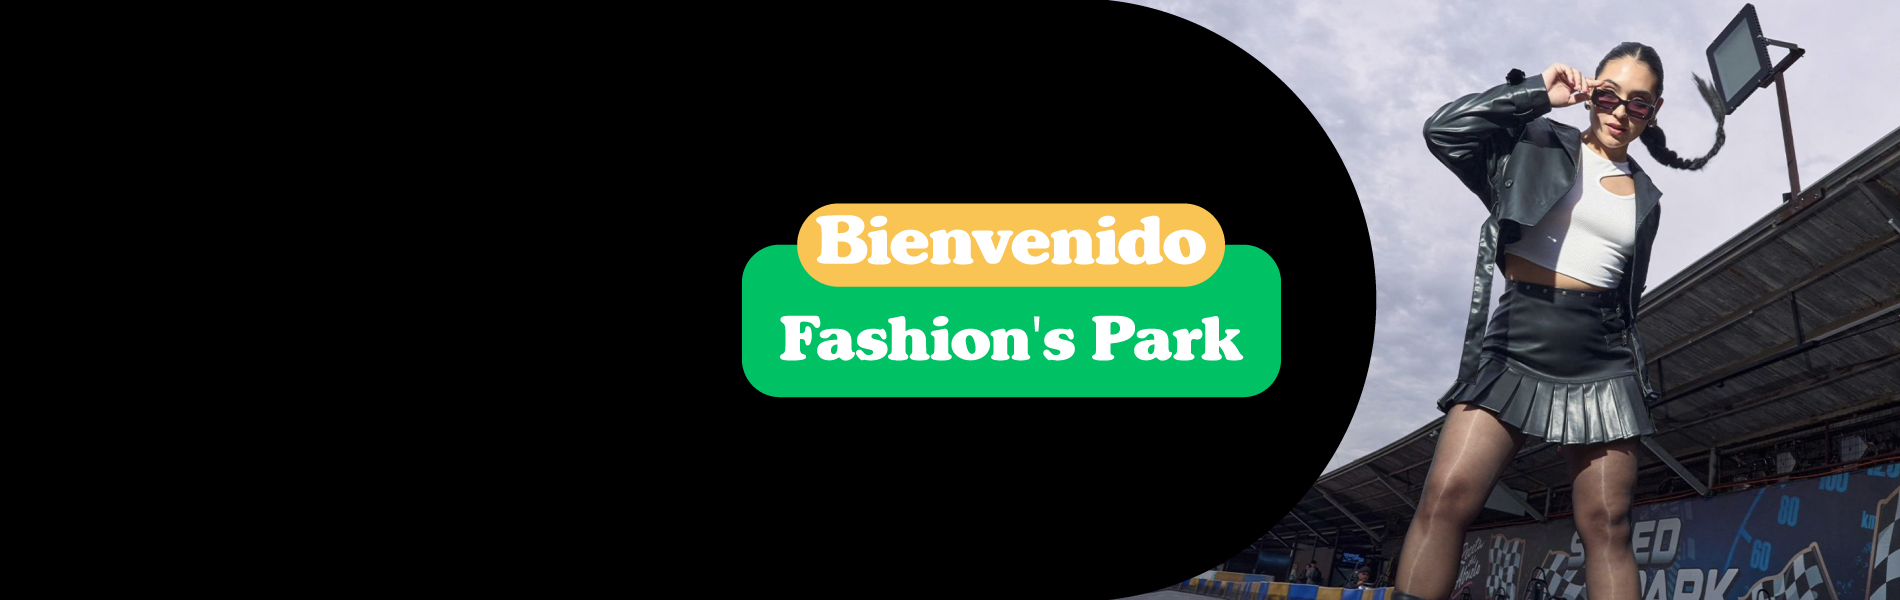 Banner Fashions Park